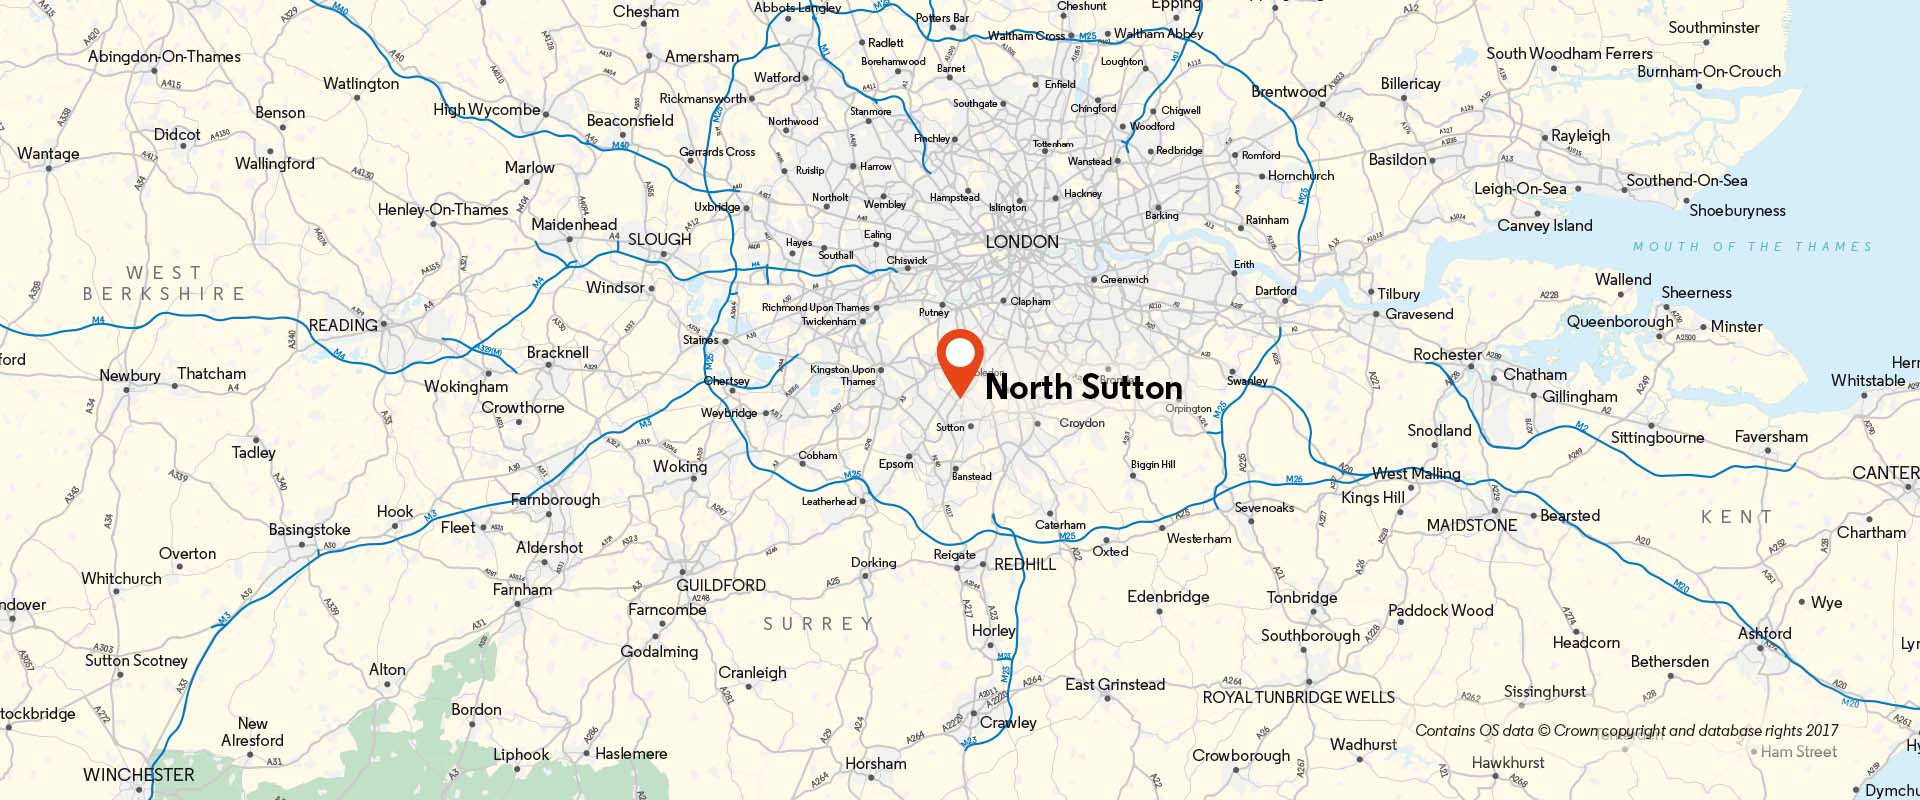 North Sutton CoM location